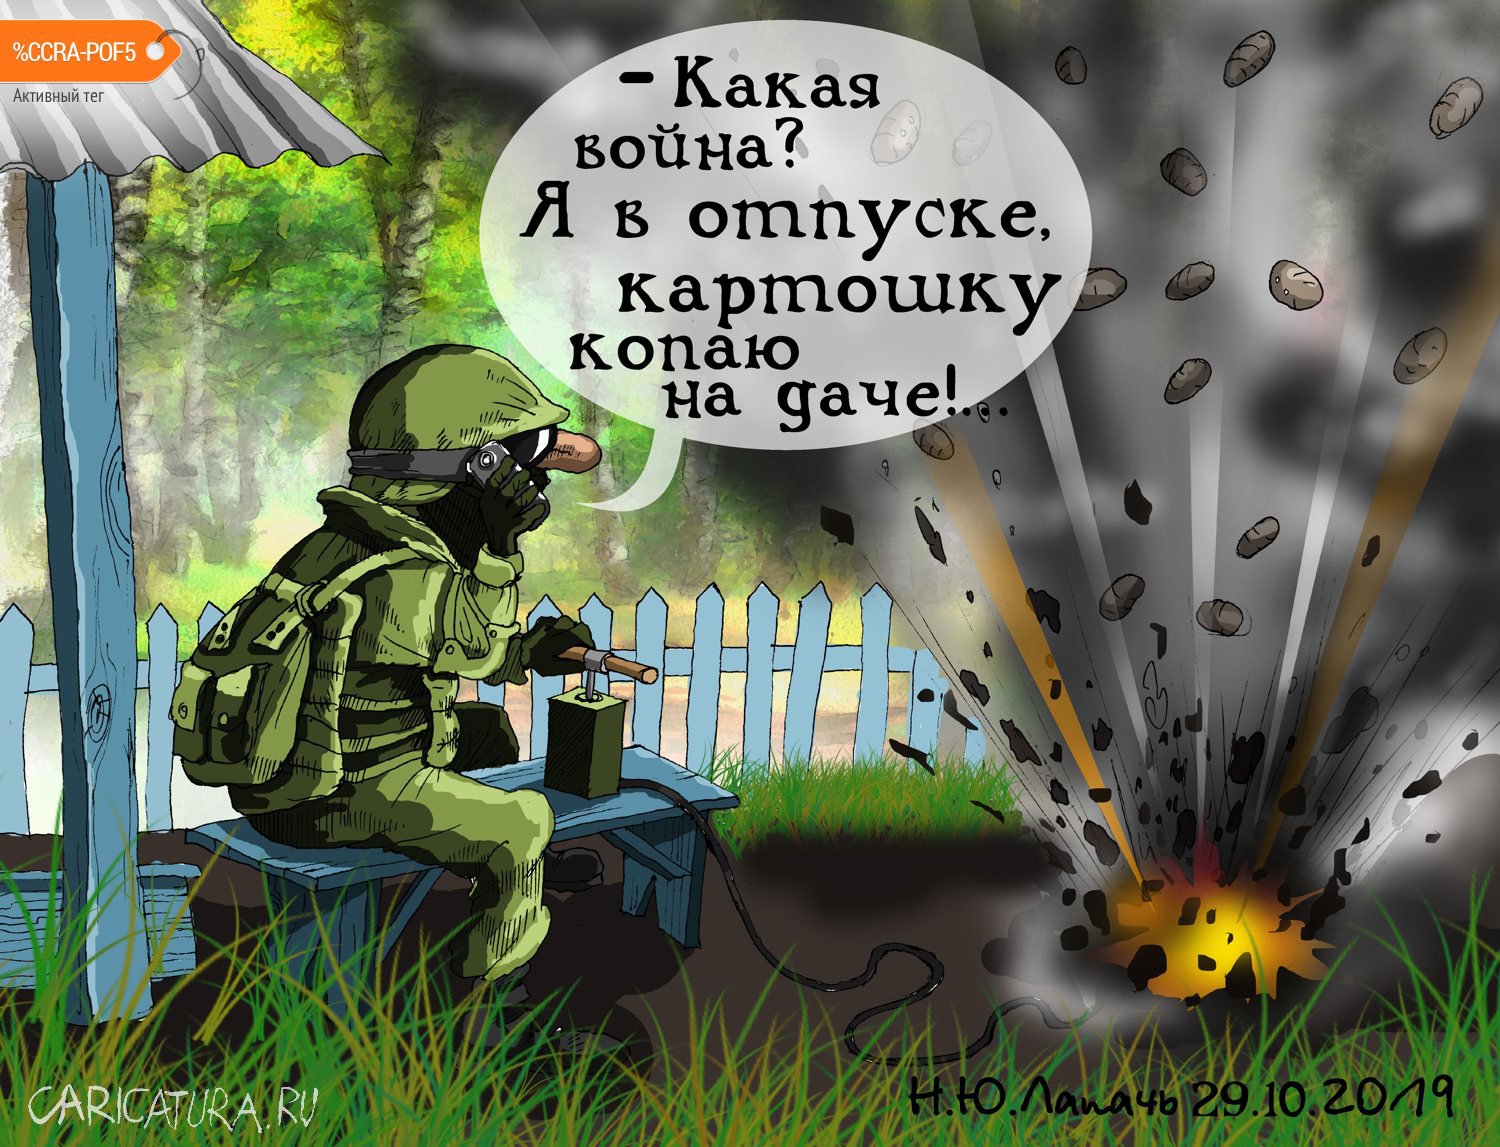 Карикатура "Отпуск", Теплый Телогрей